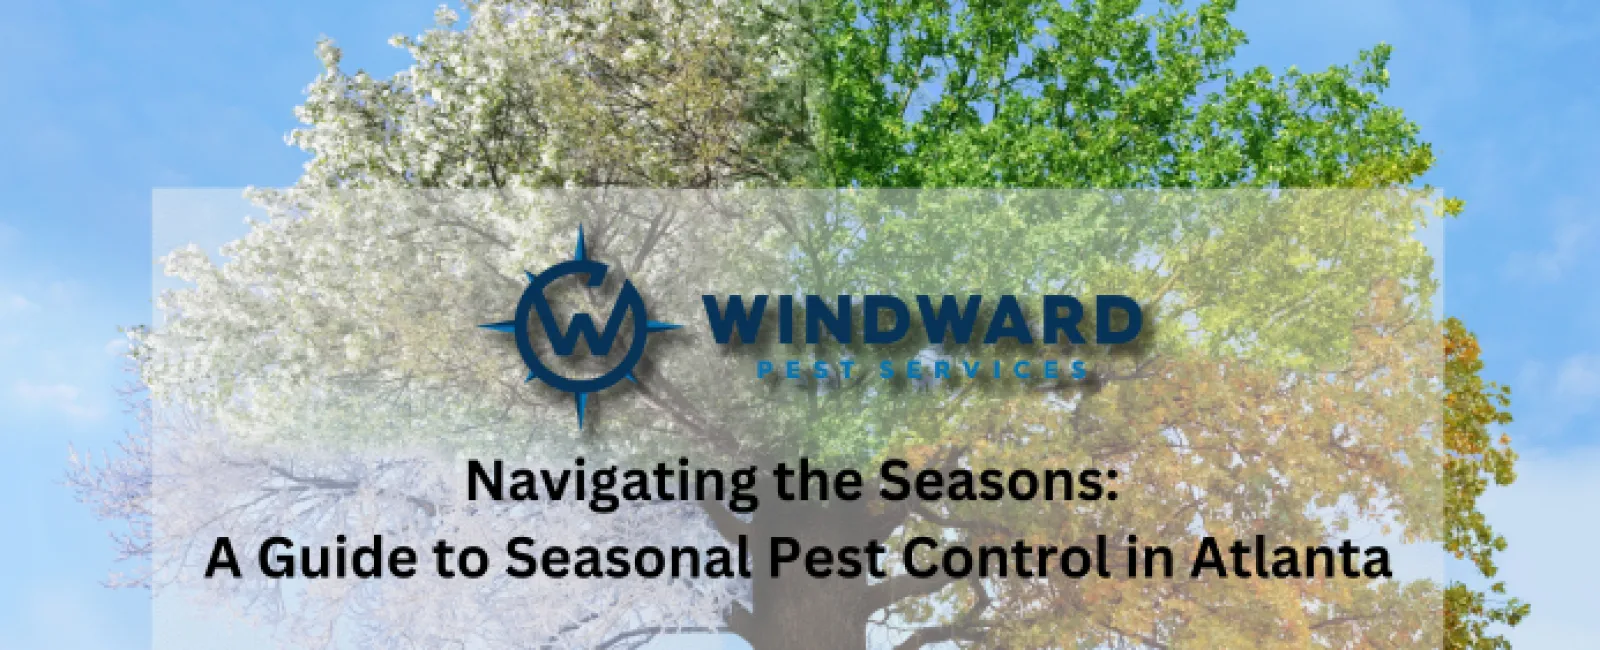 Navigating the Seasons: A Guide to Seasonal Pest Control in Atlanta